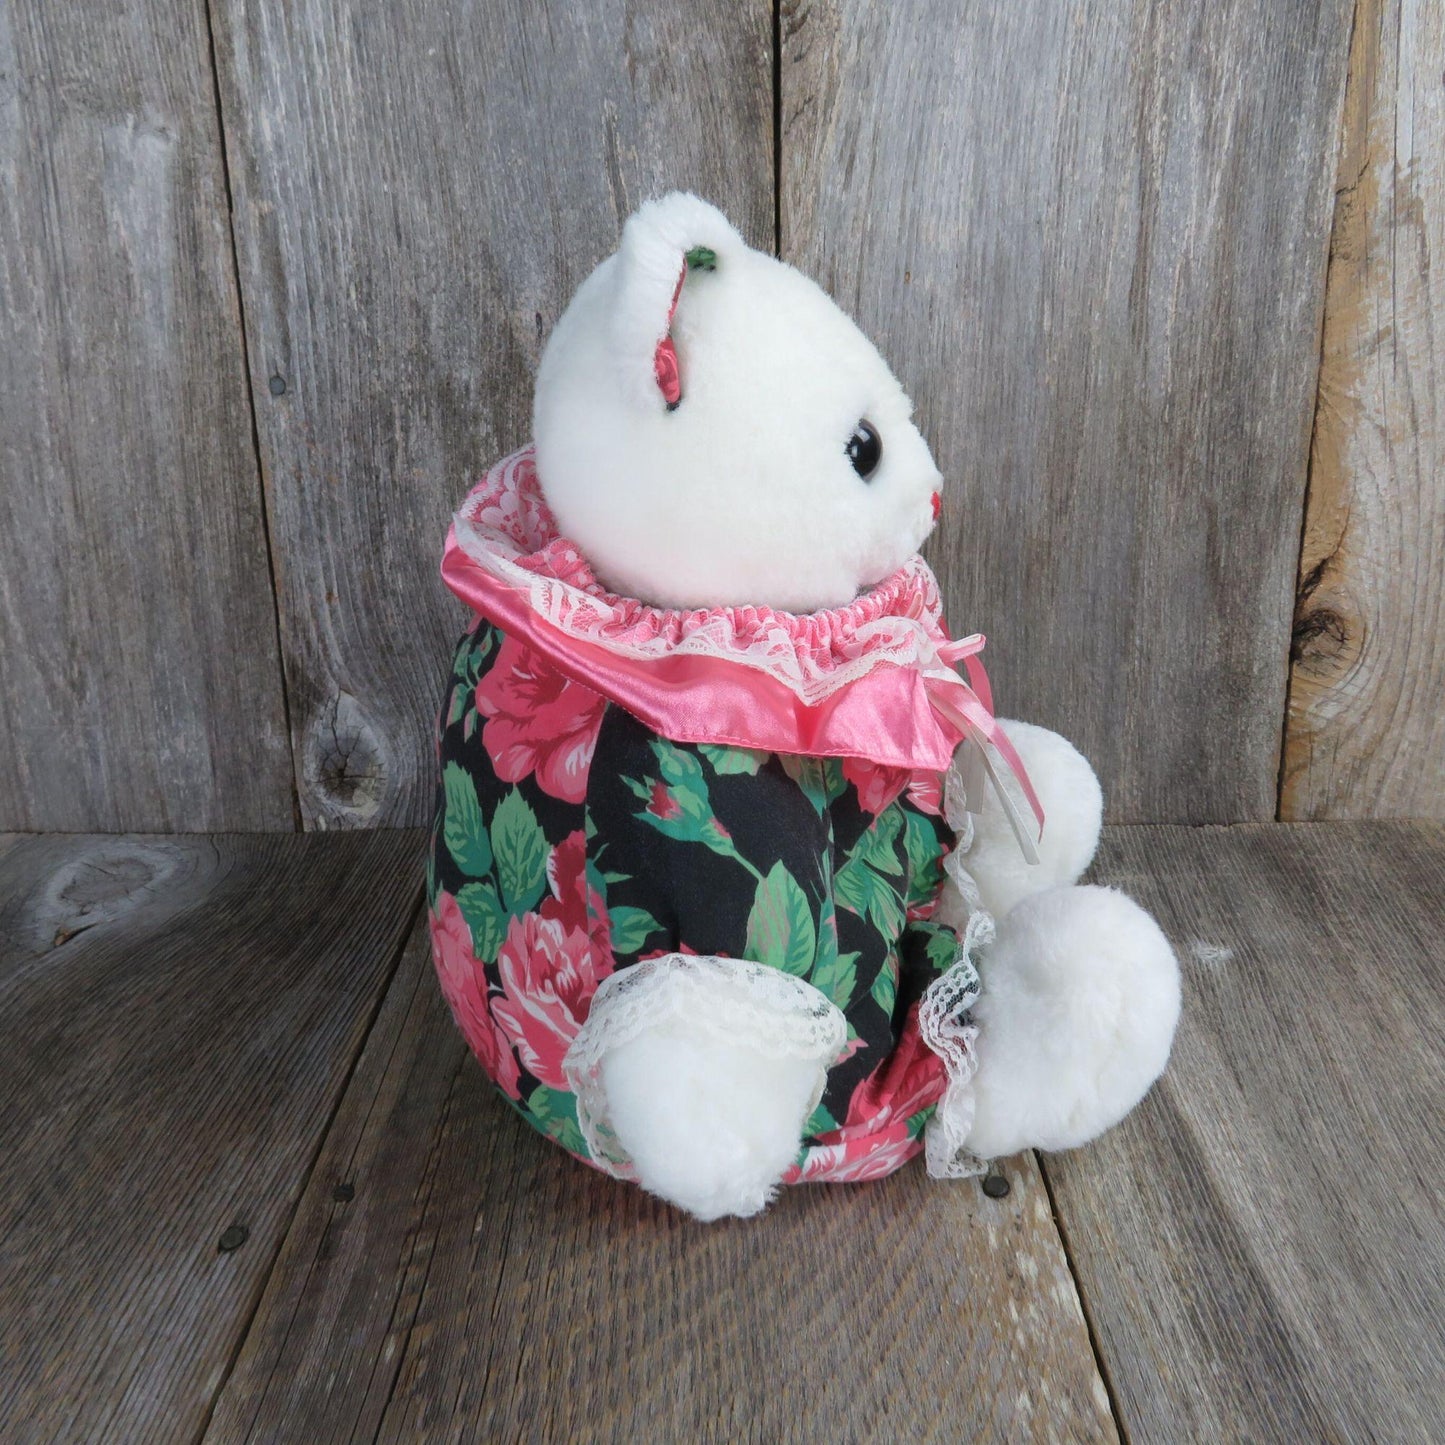 Vintage Bear Plush Fabric Body White Pink Flowers Green Black Stuffed Animal